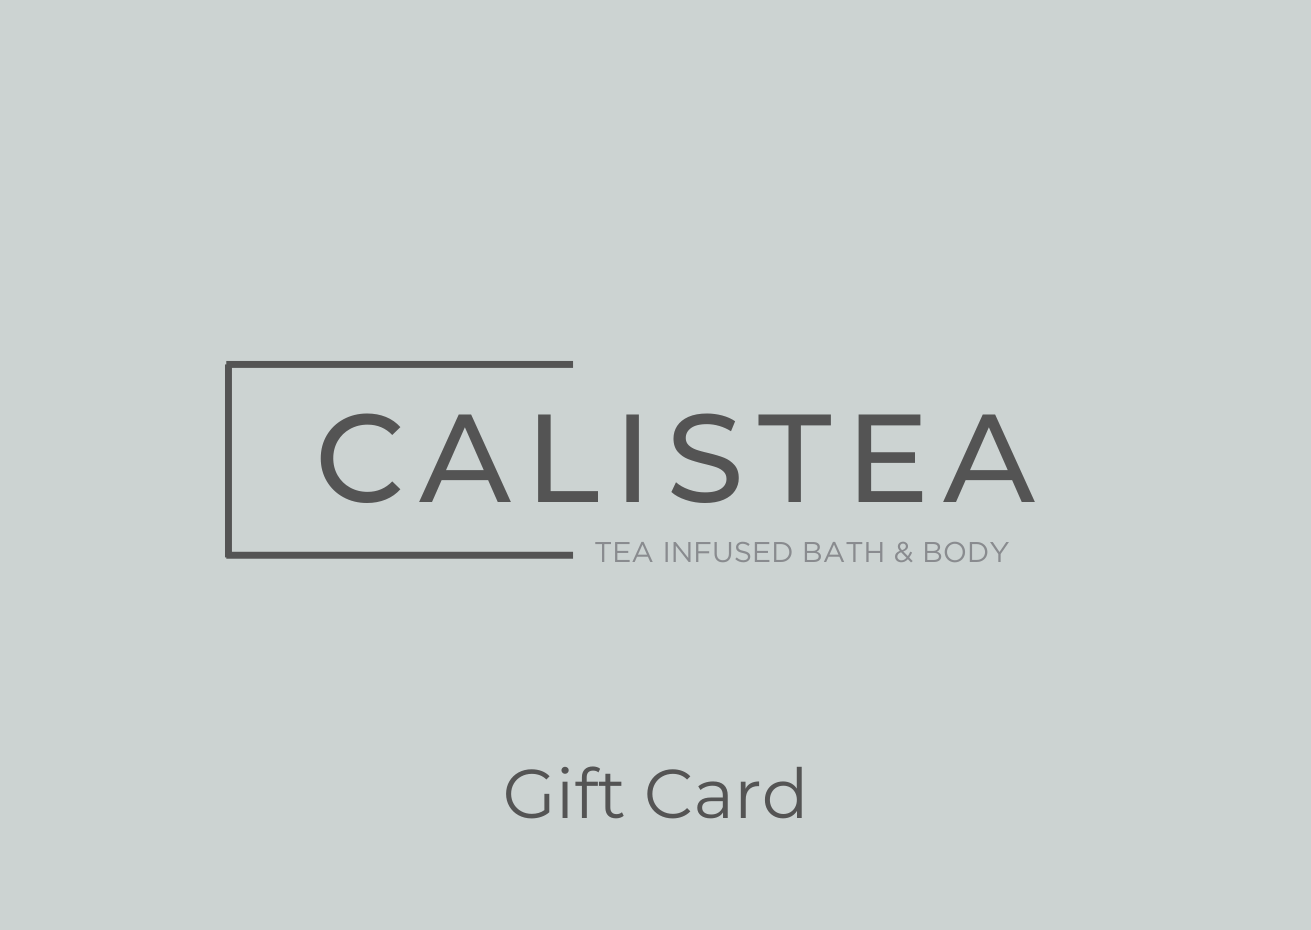 Calistea Gift Card - Calistea$10.00